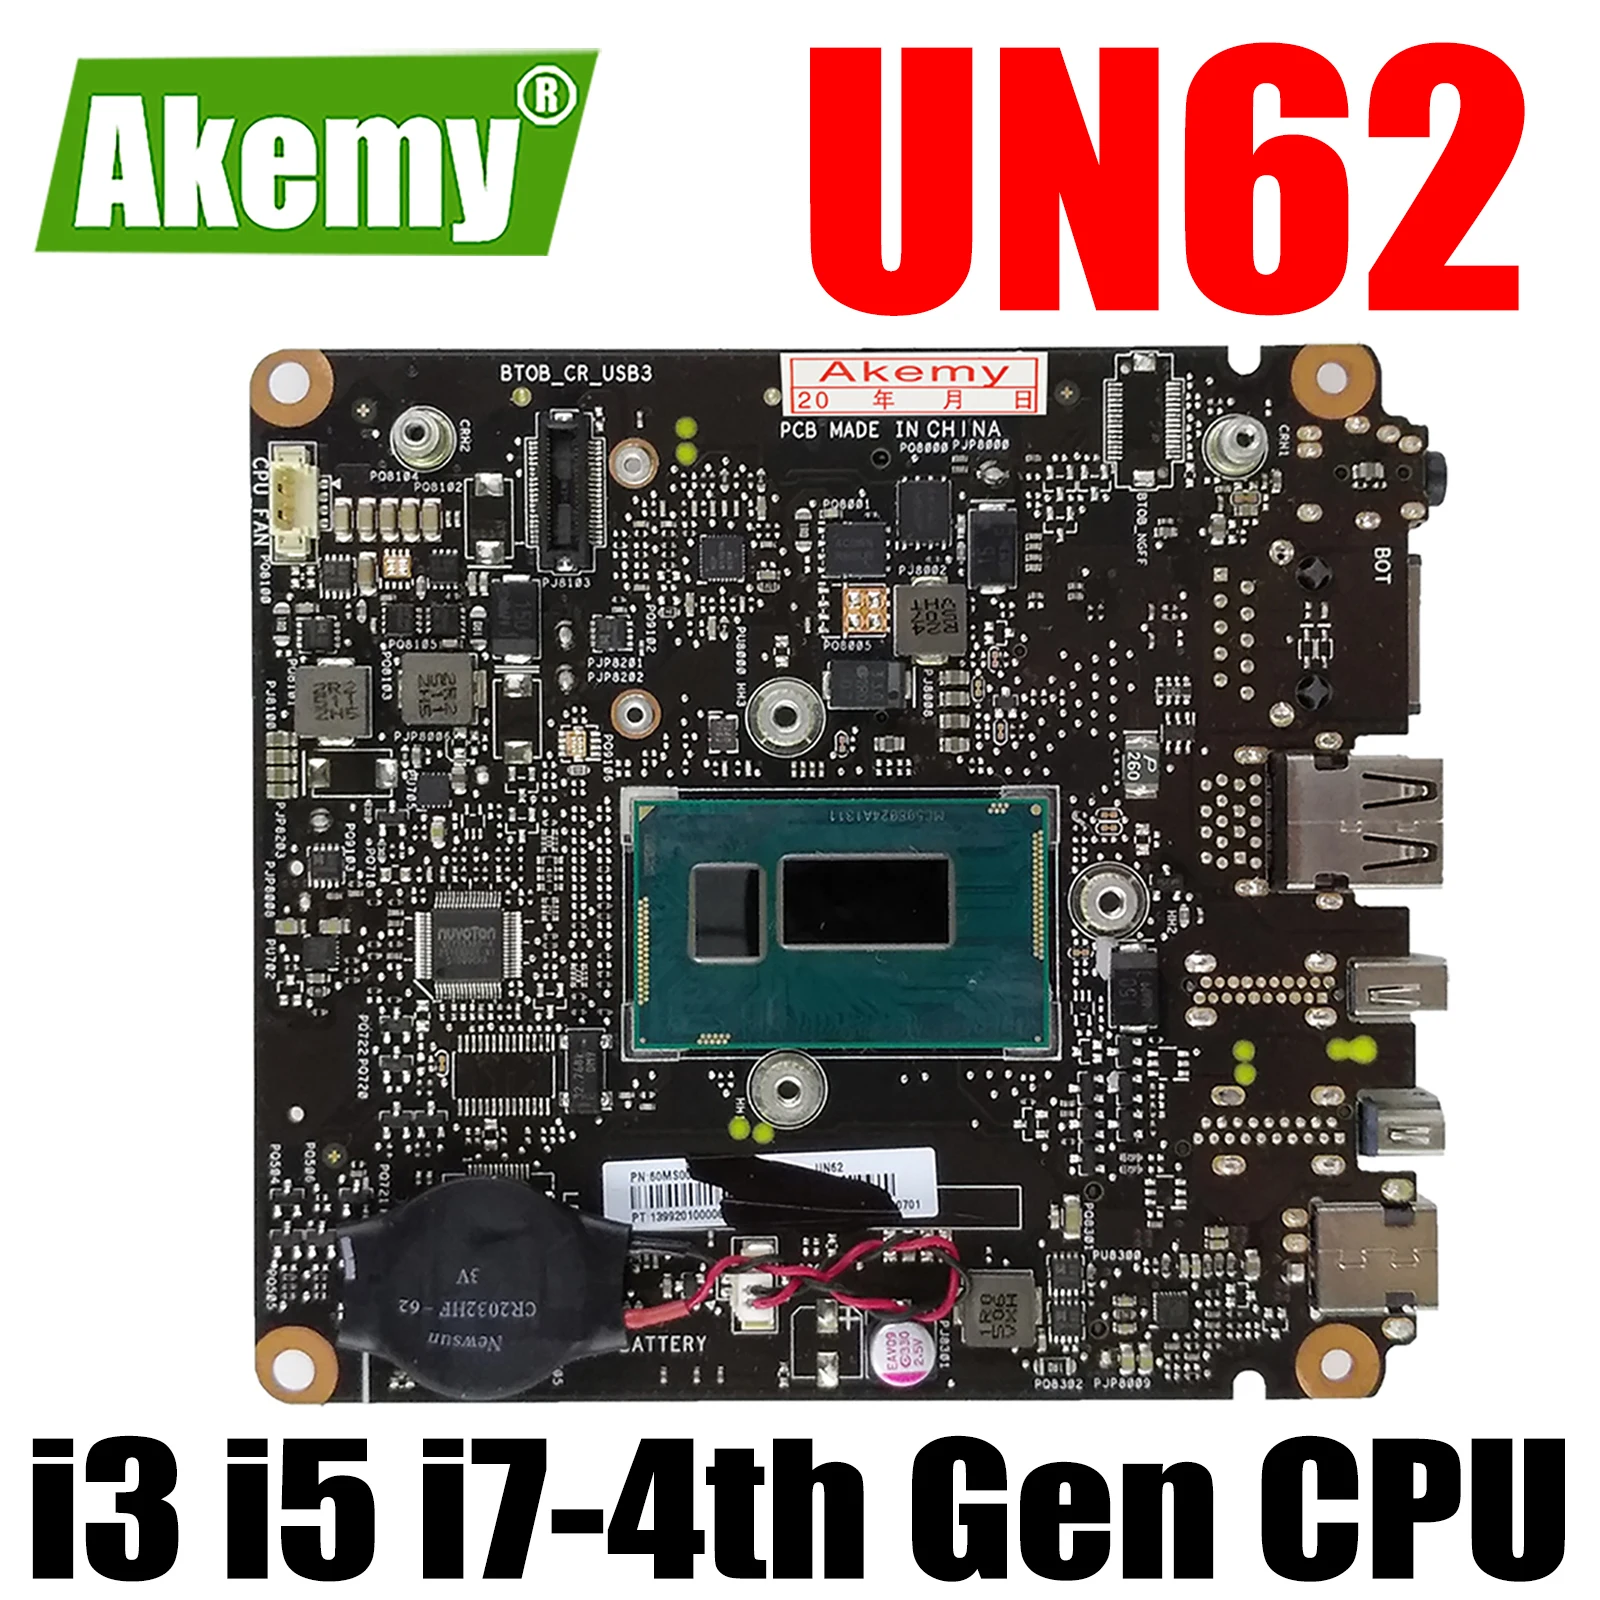 

UN62 Motherboard i3-4th Gen i5-4th Gen i7-4th Gen CPU for ASUS VivoMini UN62-i5M4S128 UN62 UN42 Mini Vivo PC Computer Mainboard